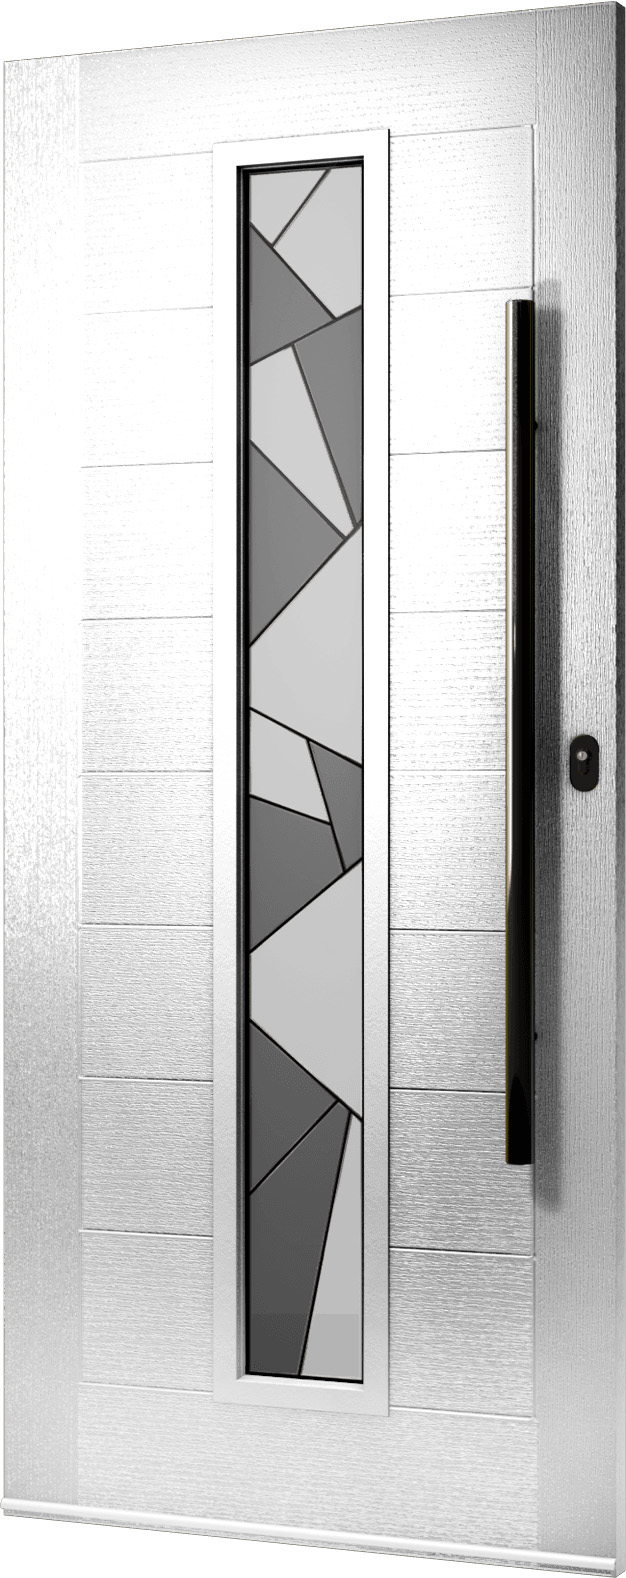 Doors Installations Farnborough